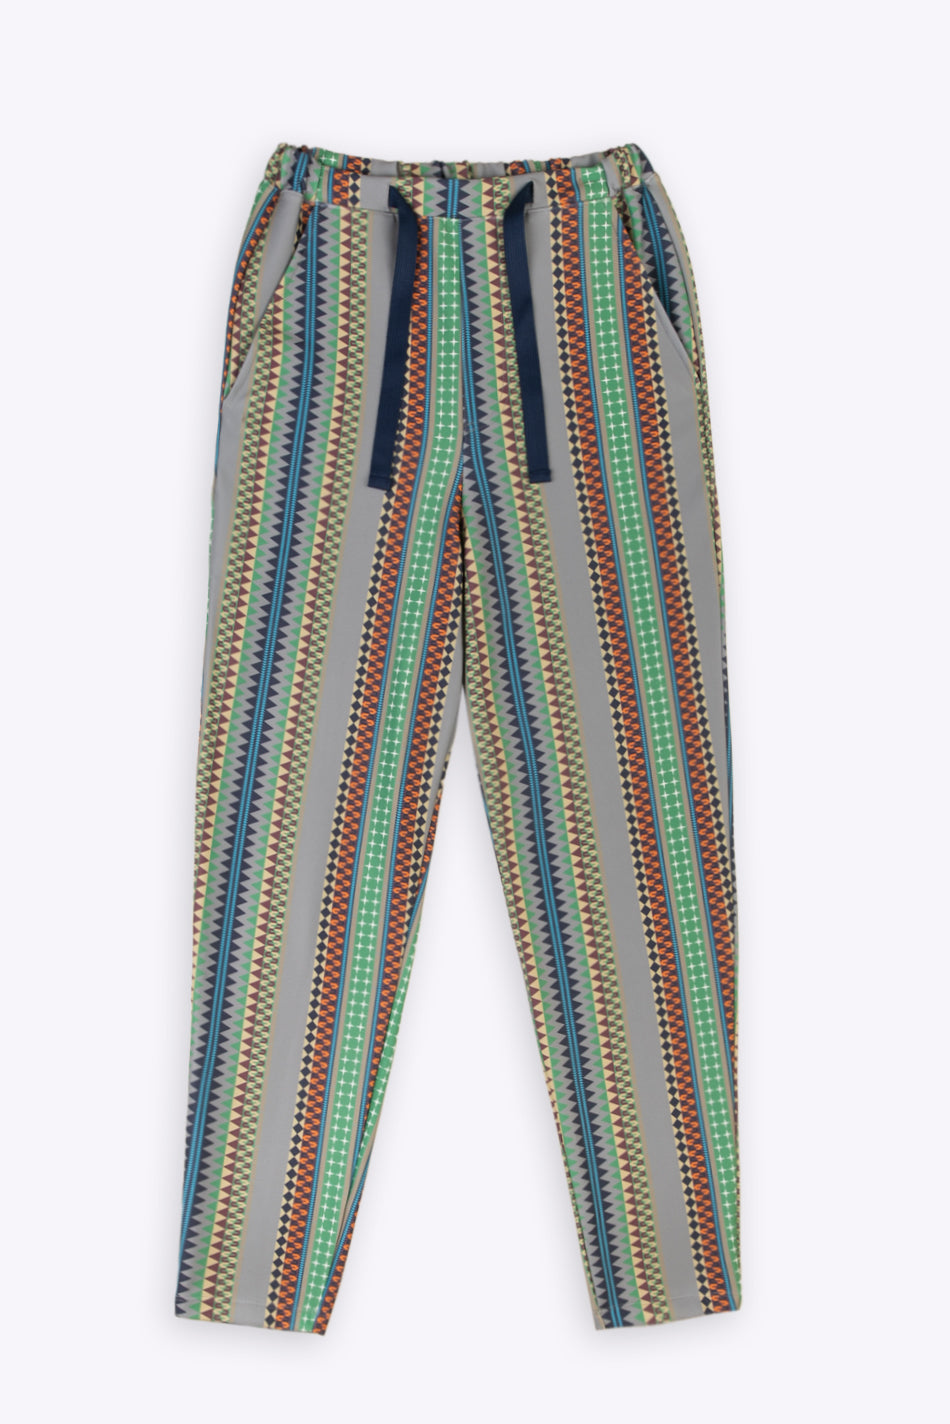 Unisex geometric print joggers pants